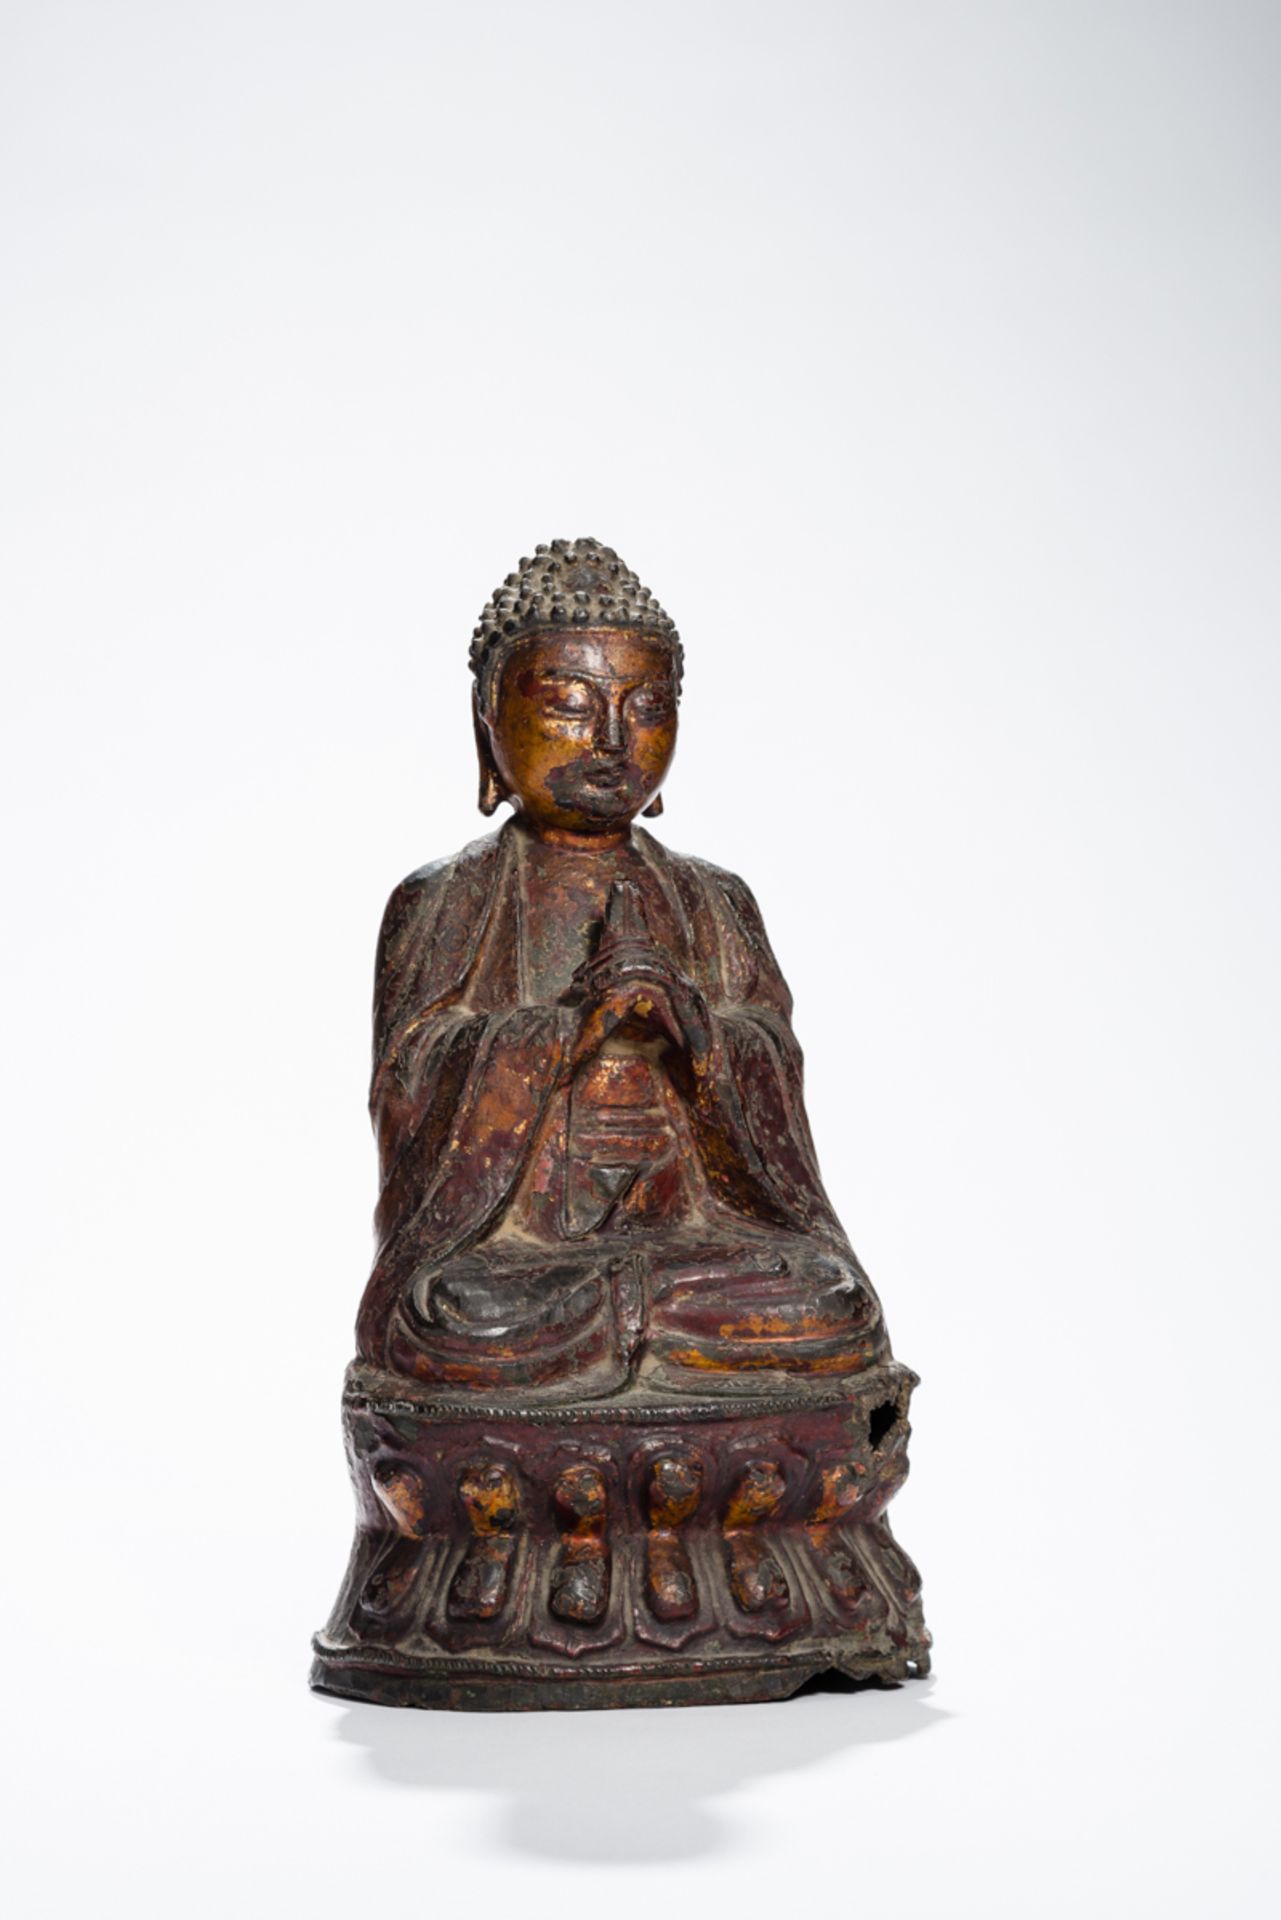 BUDDHA MIT DEm SELTENEN GESTUS DES SALBENSBronze mit Vergoldung. China, ca. 17. Jh.Buddha - Image 3 of 8